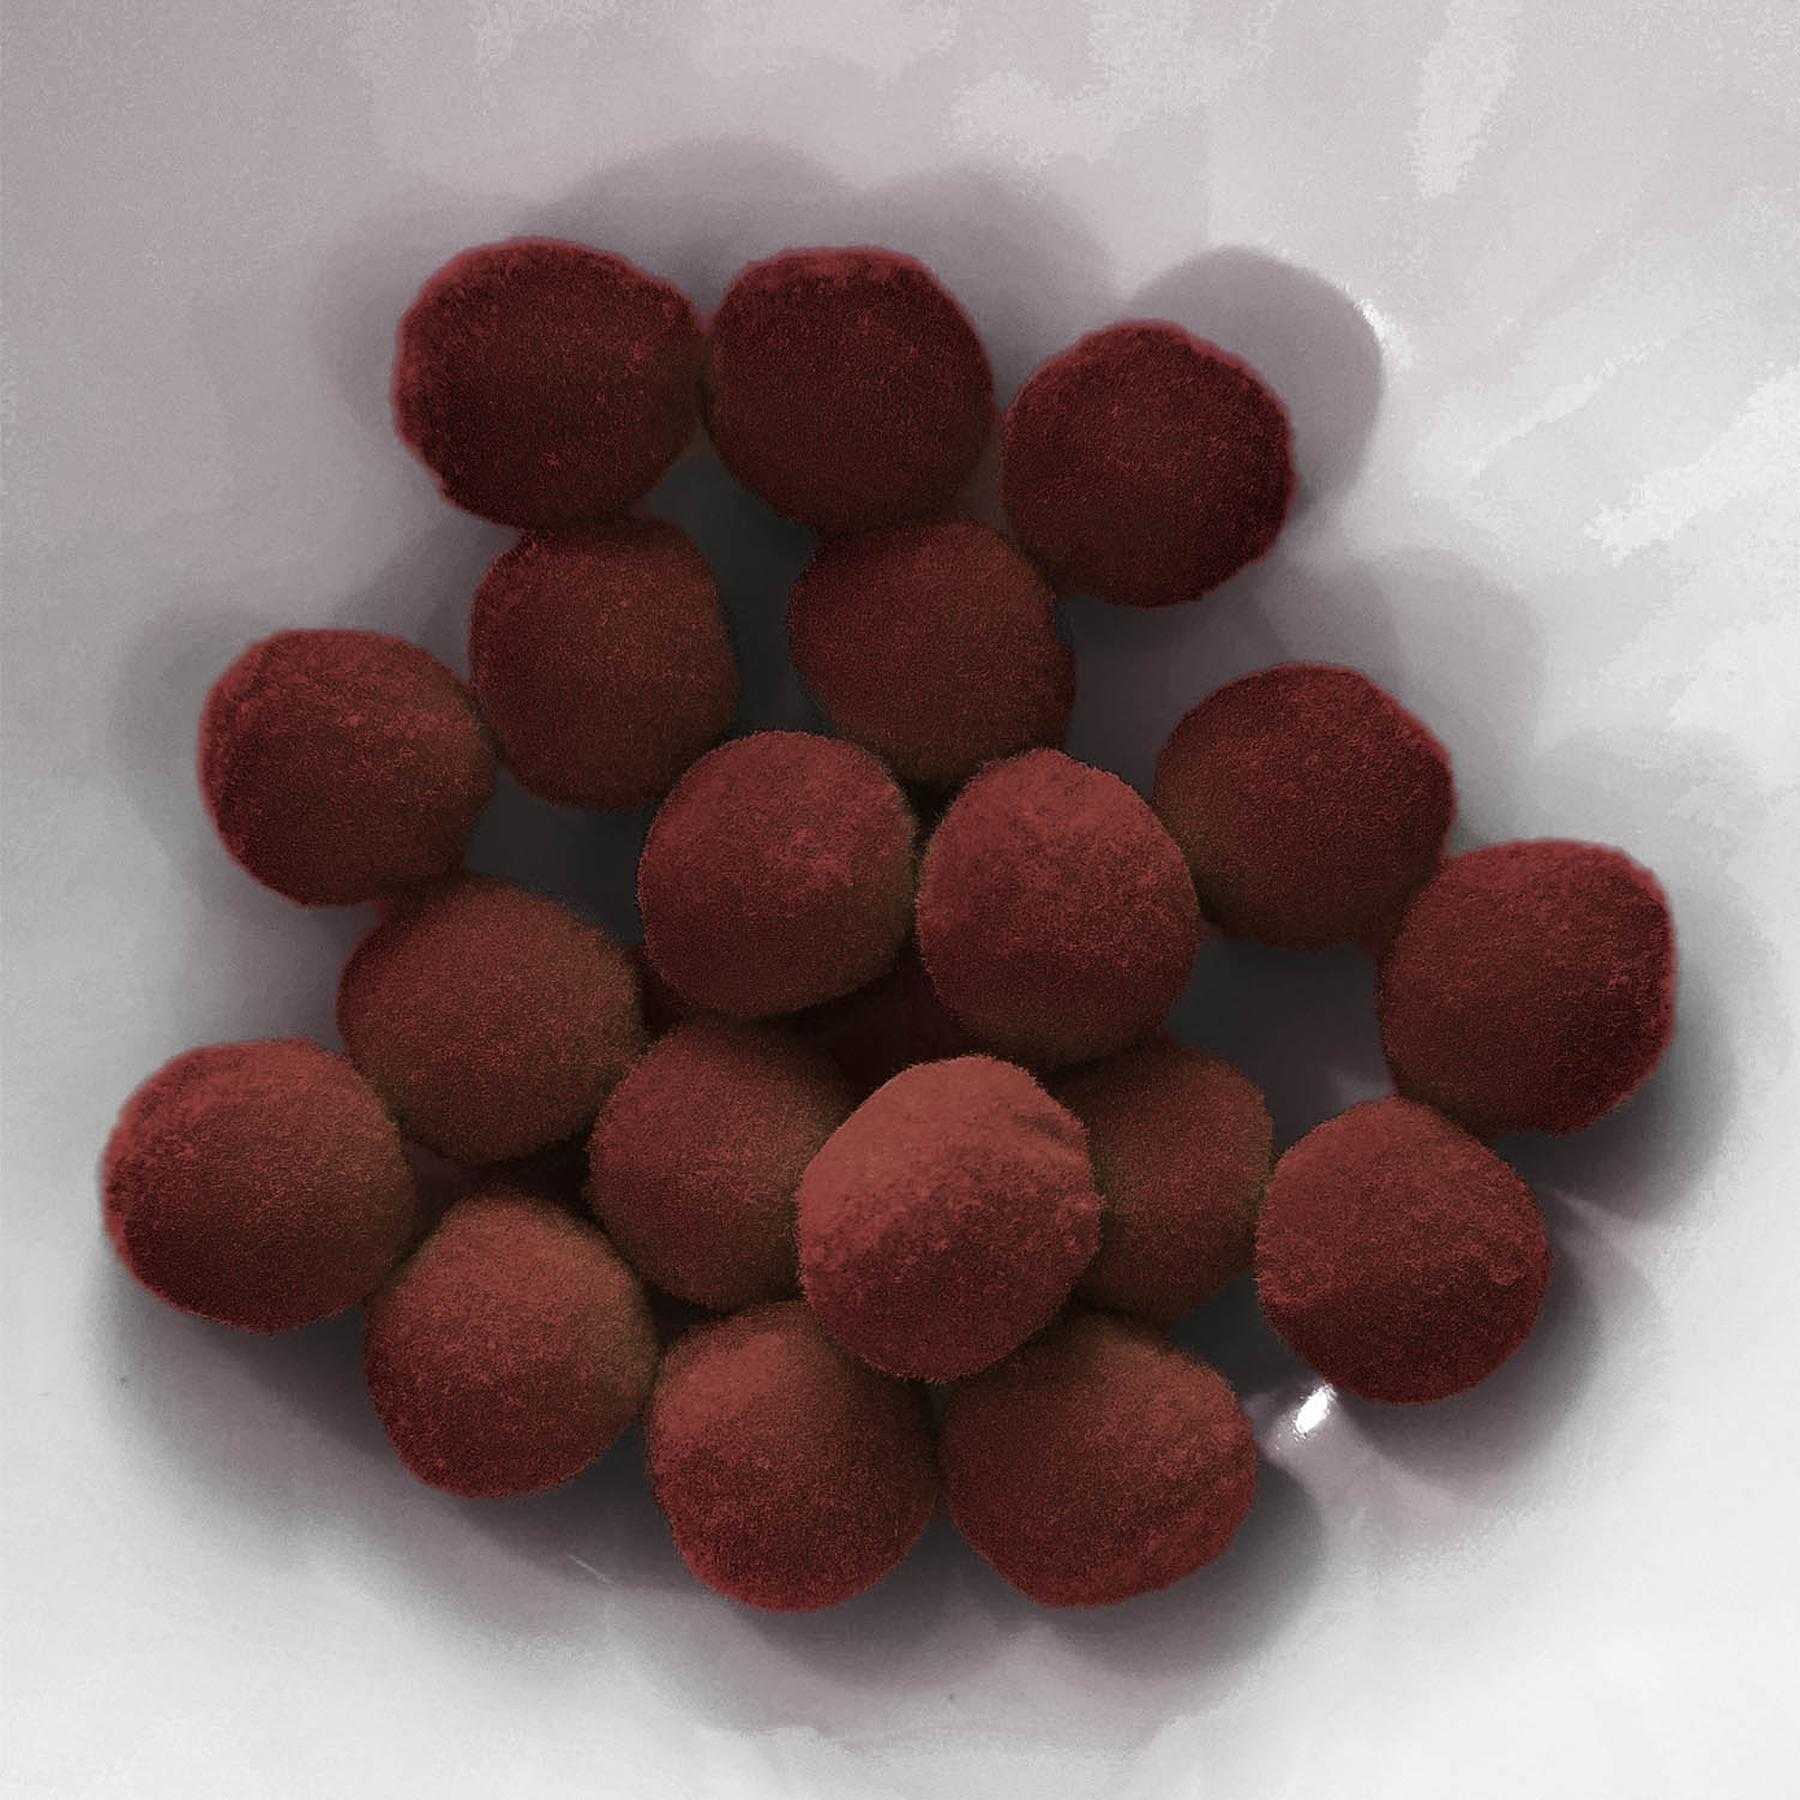 PomPon / Bälle aus Baumwolle - 20 mm / 25er Set - Rot dunkel / Bordeaux